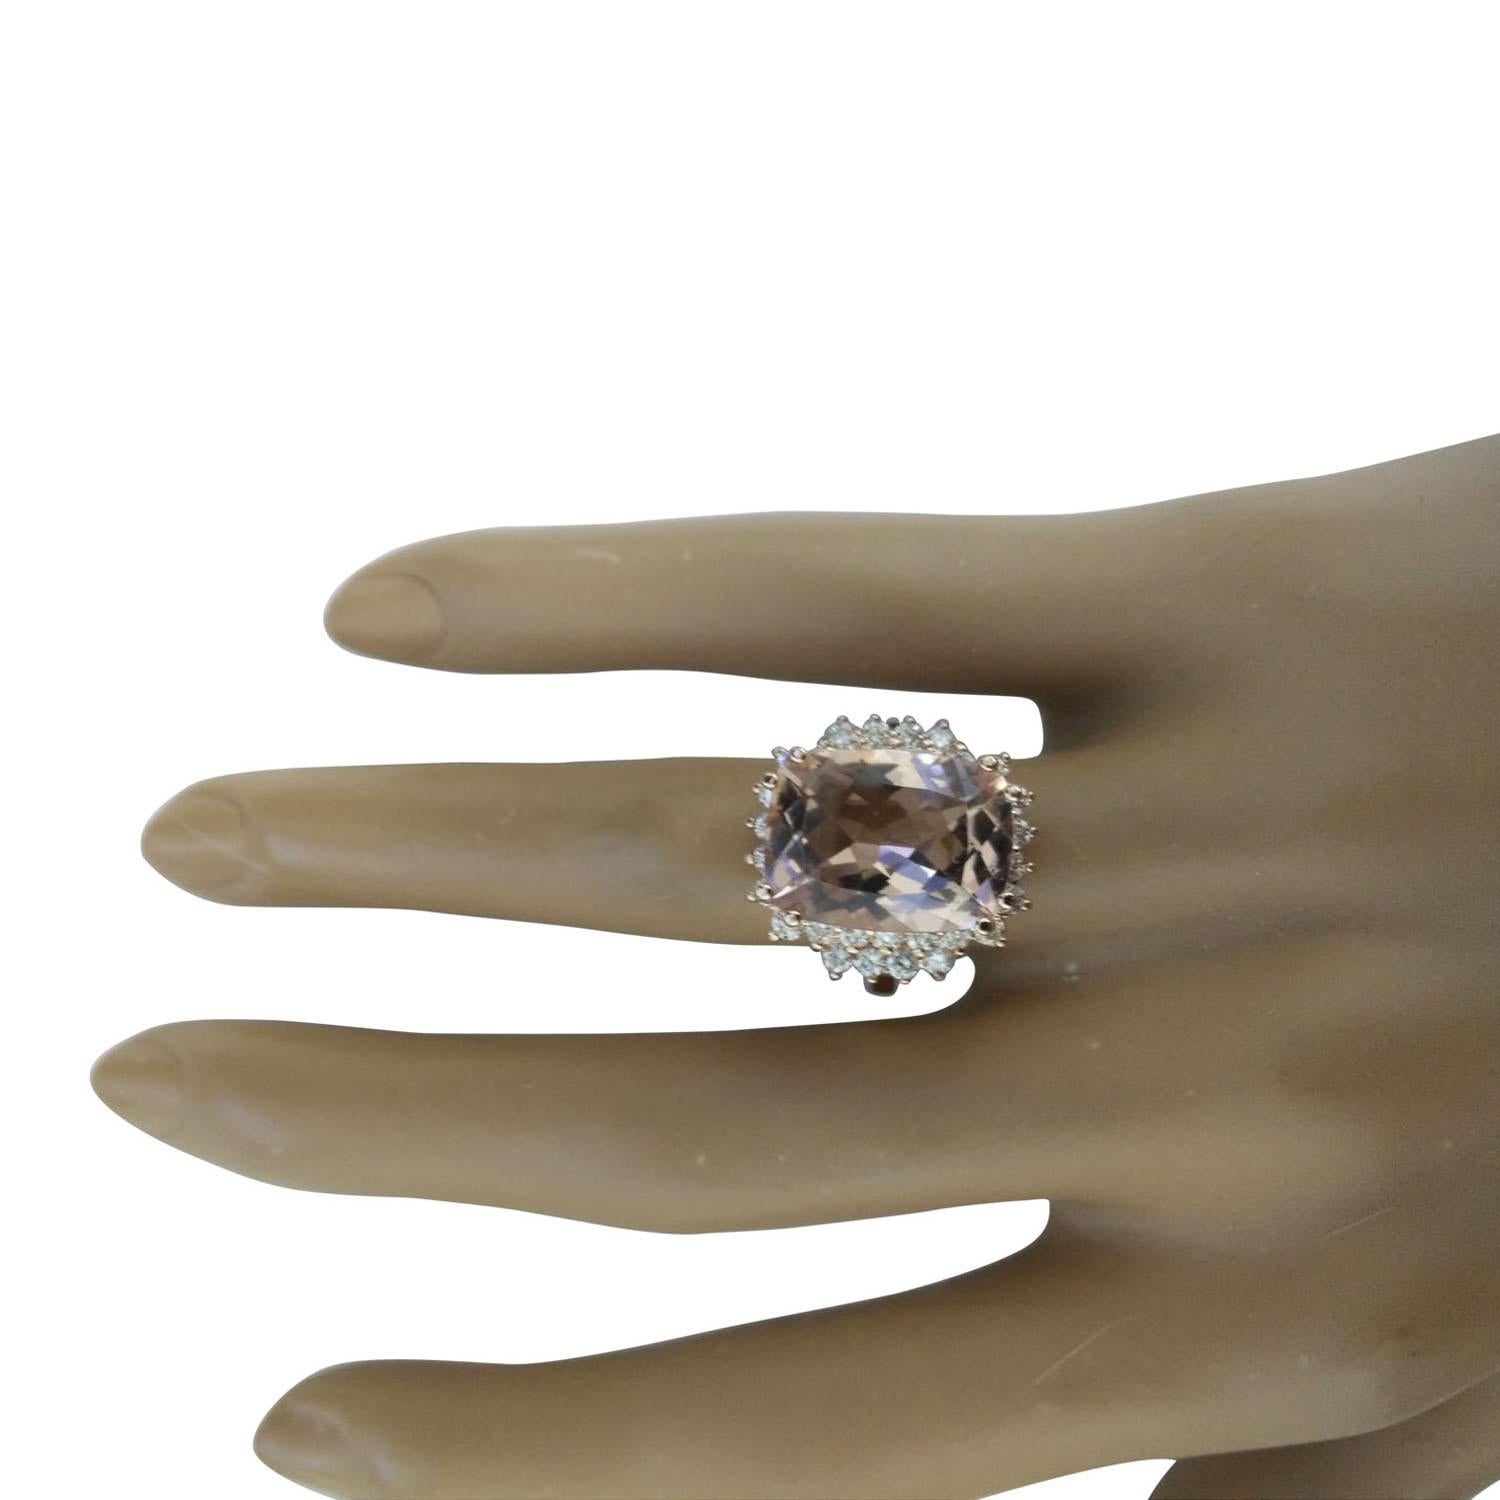 8.25 Carat Natural Morganite 14 Karat Solid Rose Gold Diamond Ring
Stamped: 14K 
Total Ring Weight: 6 Grams 
Morganite Weight: 7.25 Carat (15.00x11.00 Millimeters)  
Diamond Weight: 1.00 Carat (F-G Color, VS2-SI1 Clarity )
Face Measures: 18.30x17.30